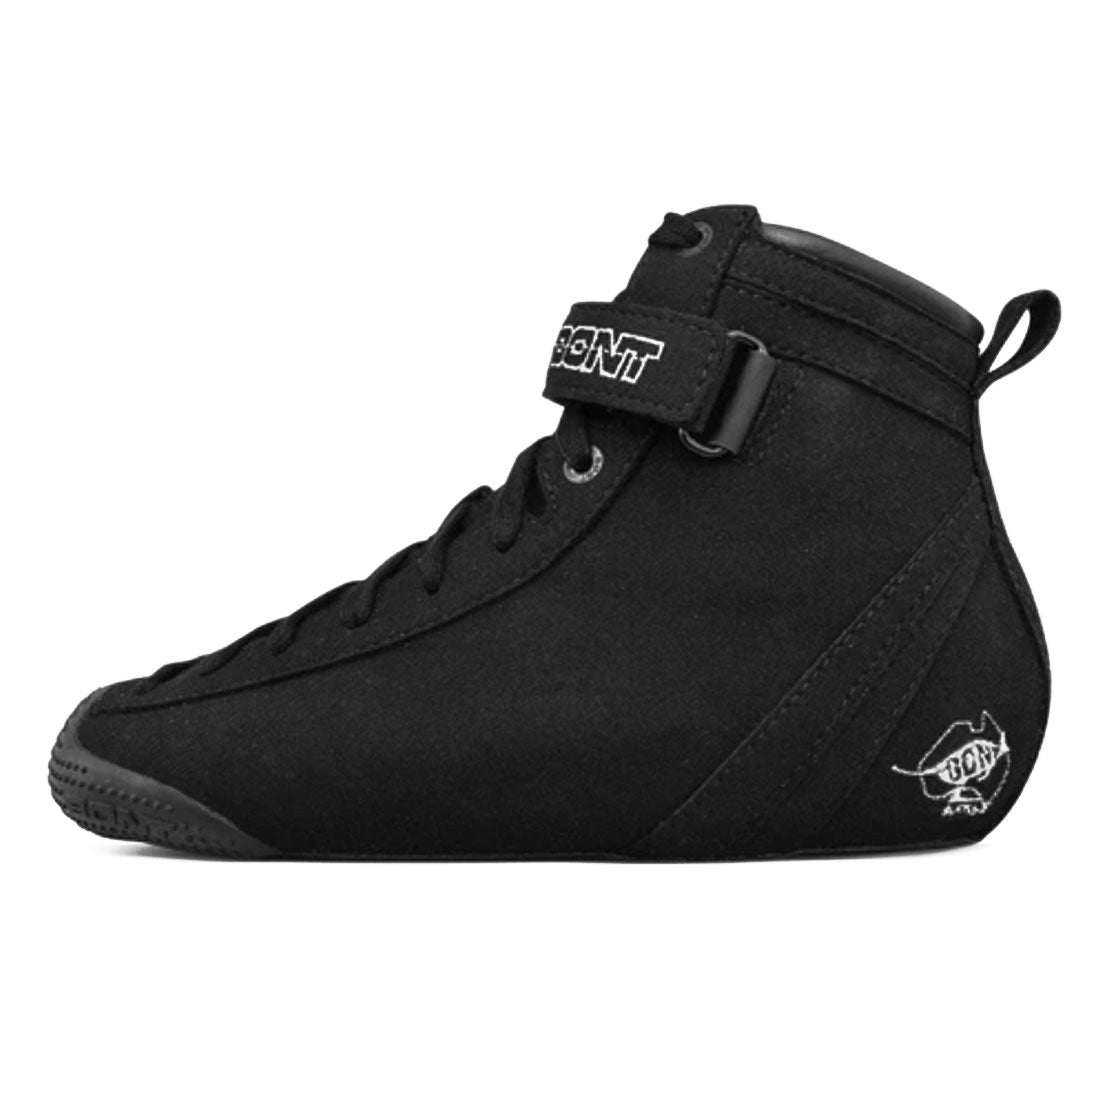 Bont ParkStar Vegan Boot - Black Roller Skate Boots